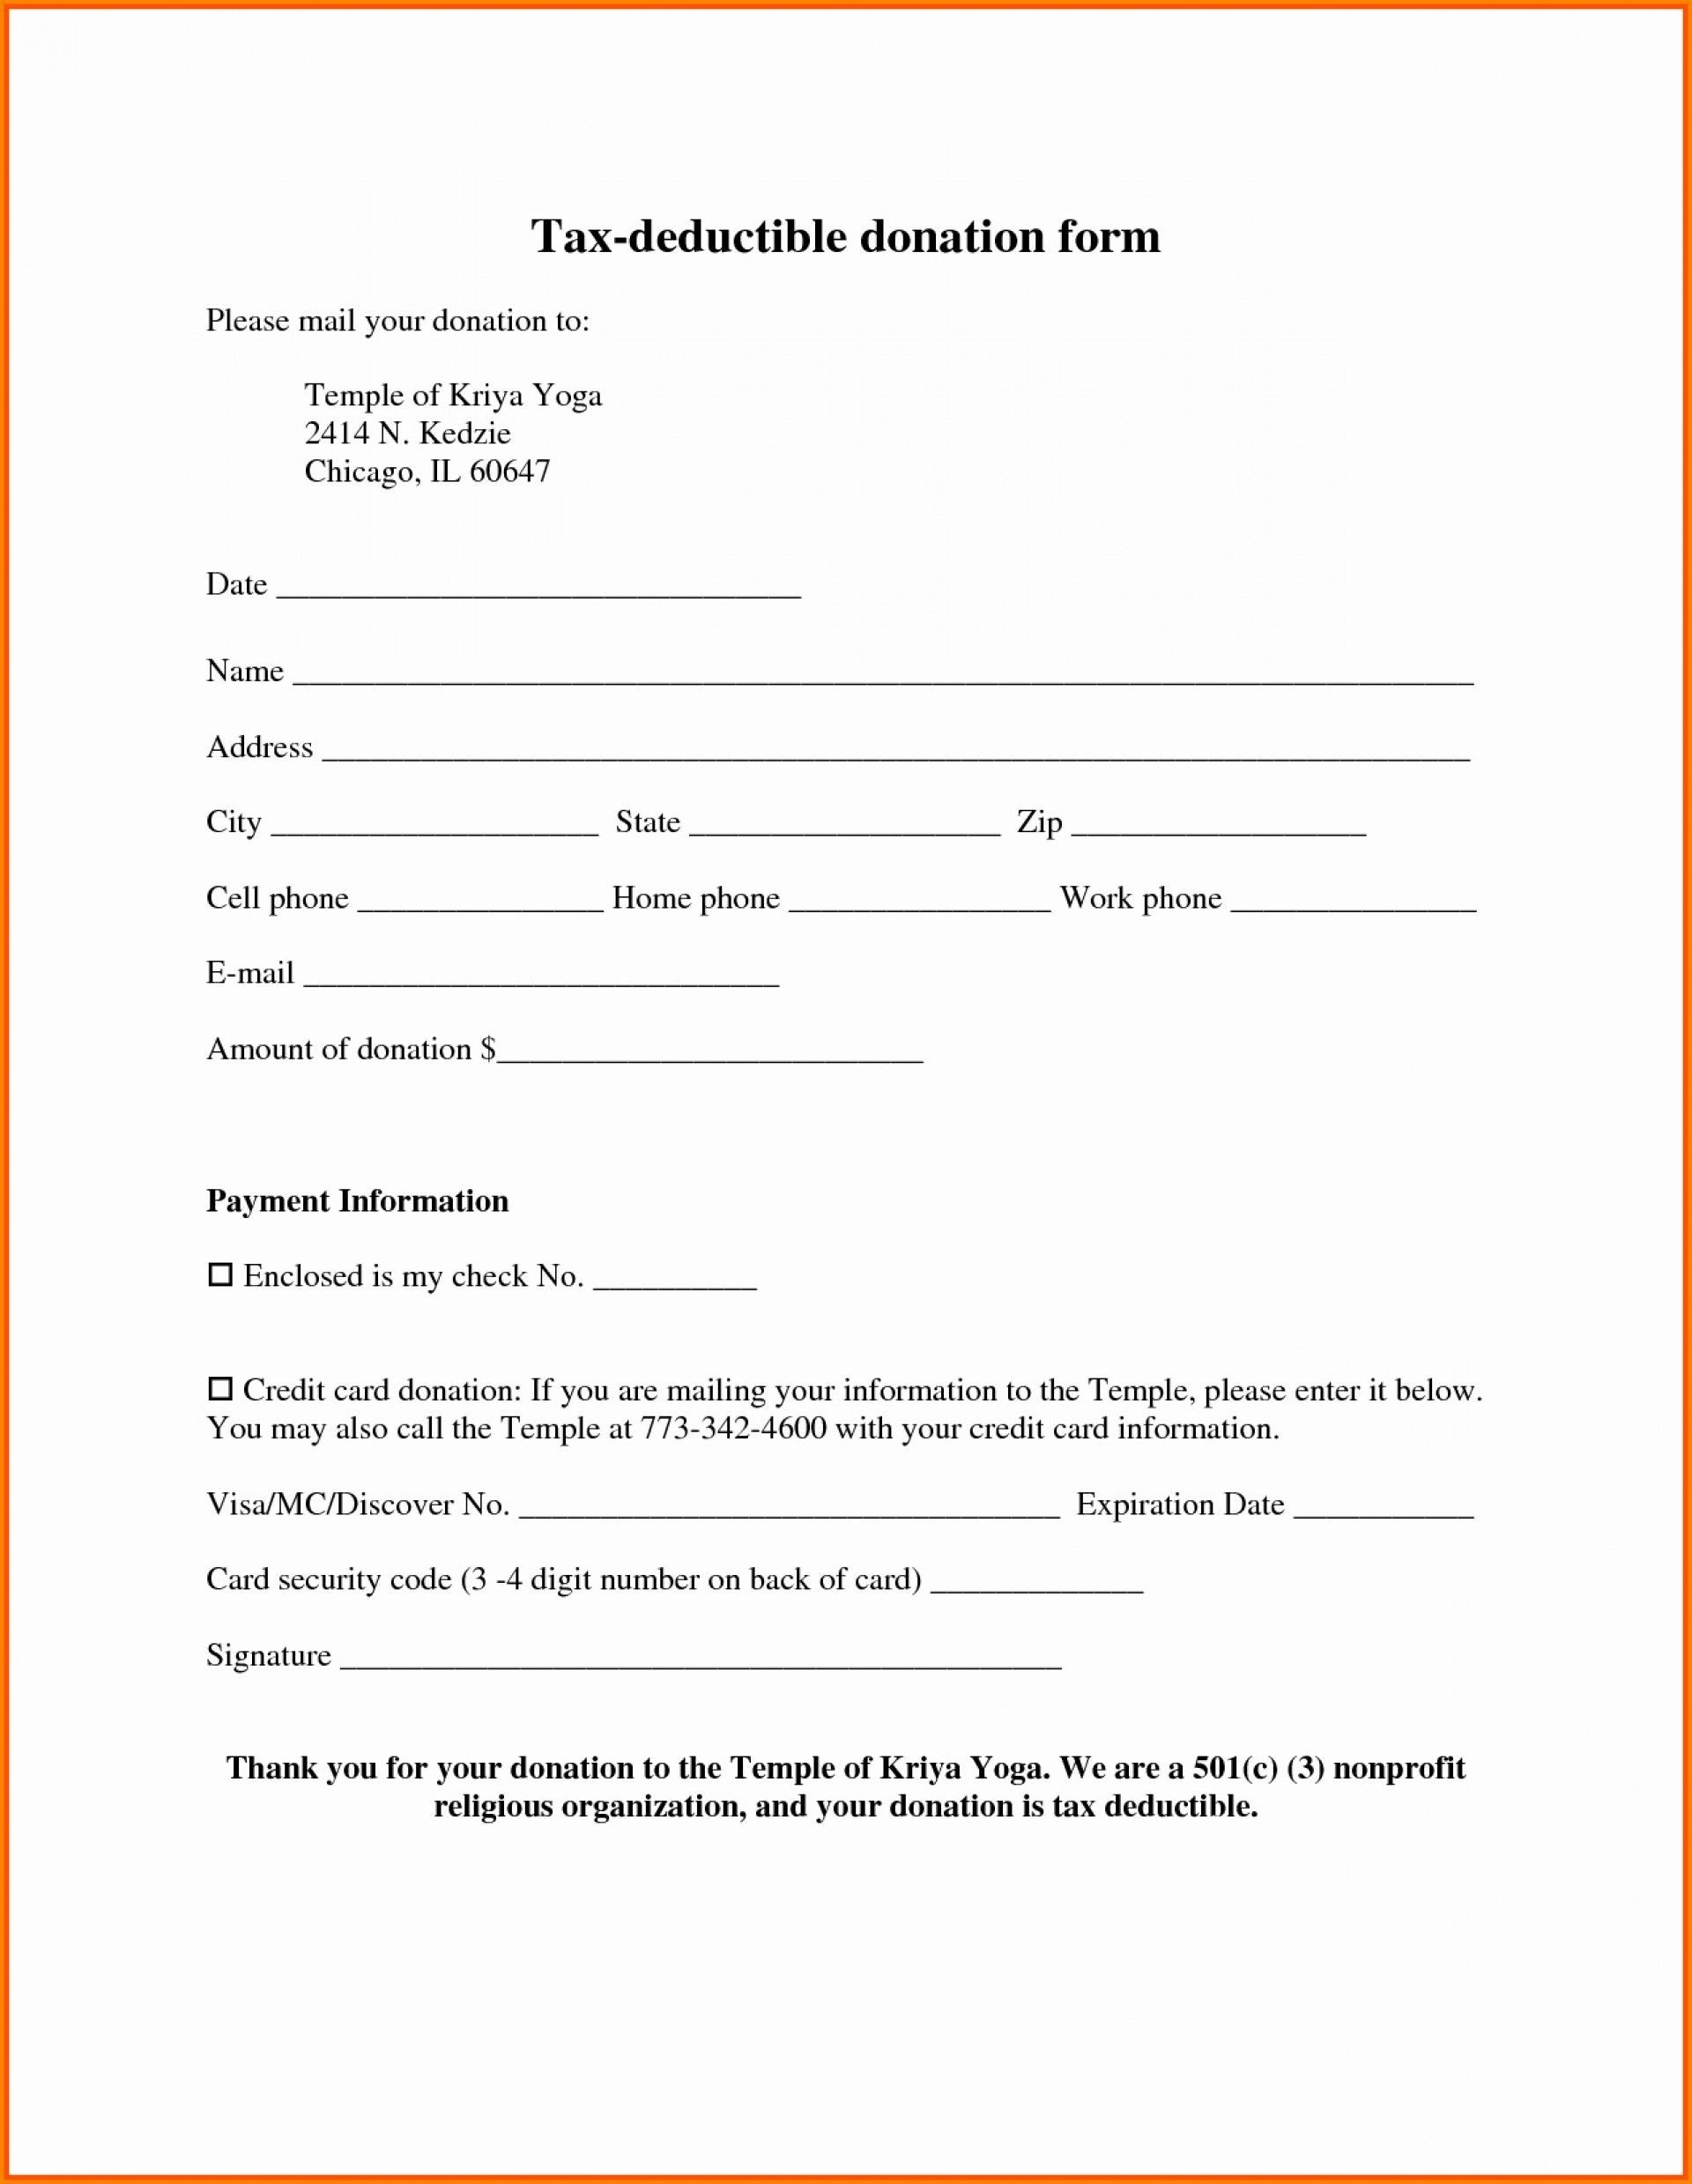 Donation Form Template Income Tax Request Pdf Free Non-Free Printout Tax Desk Card